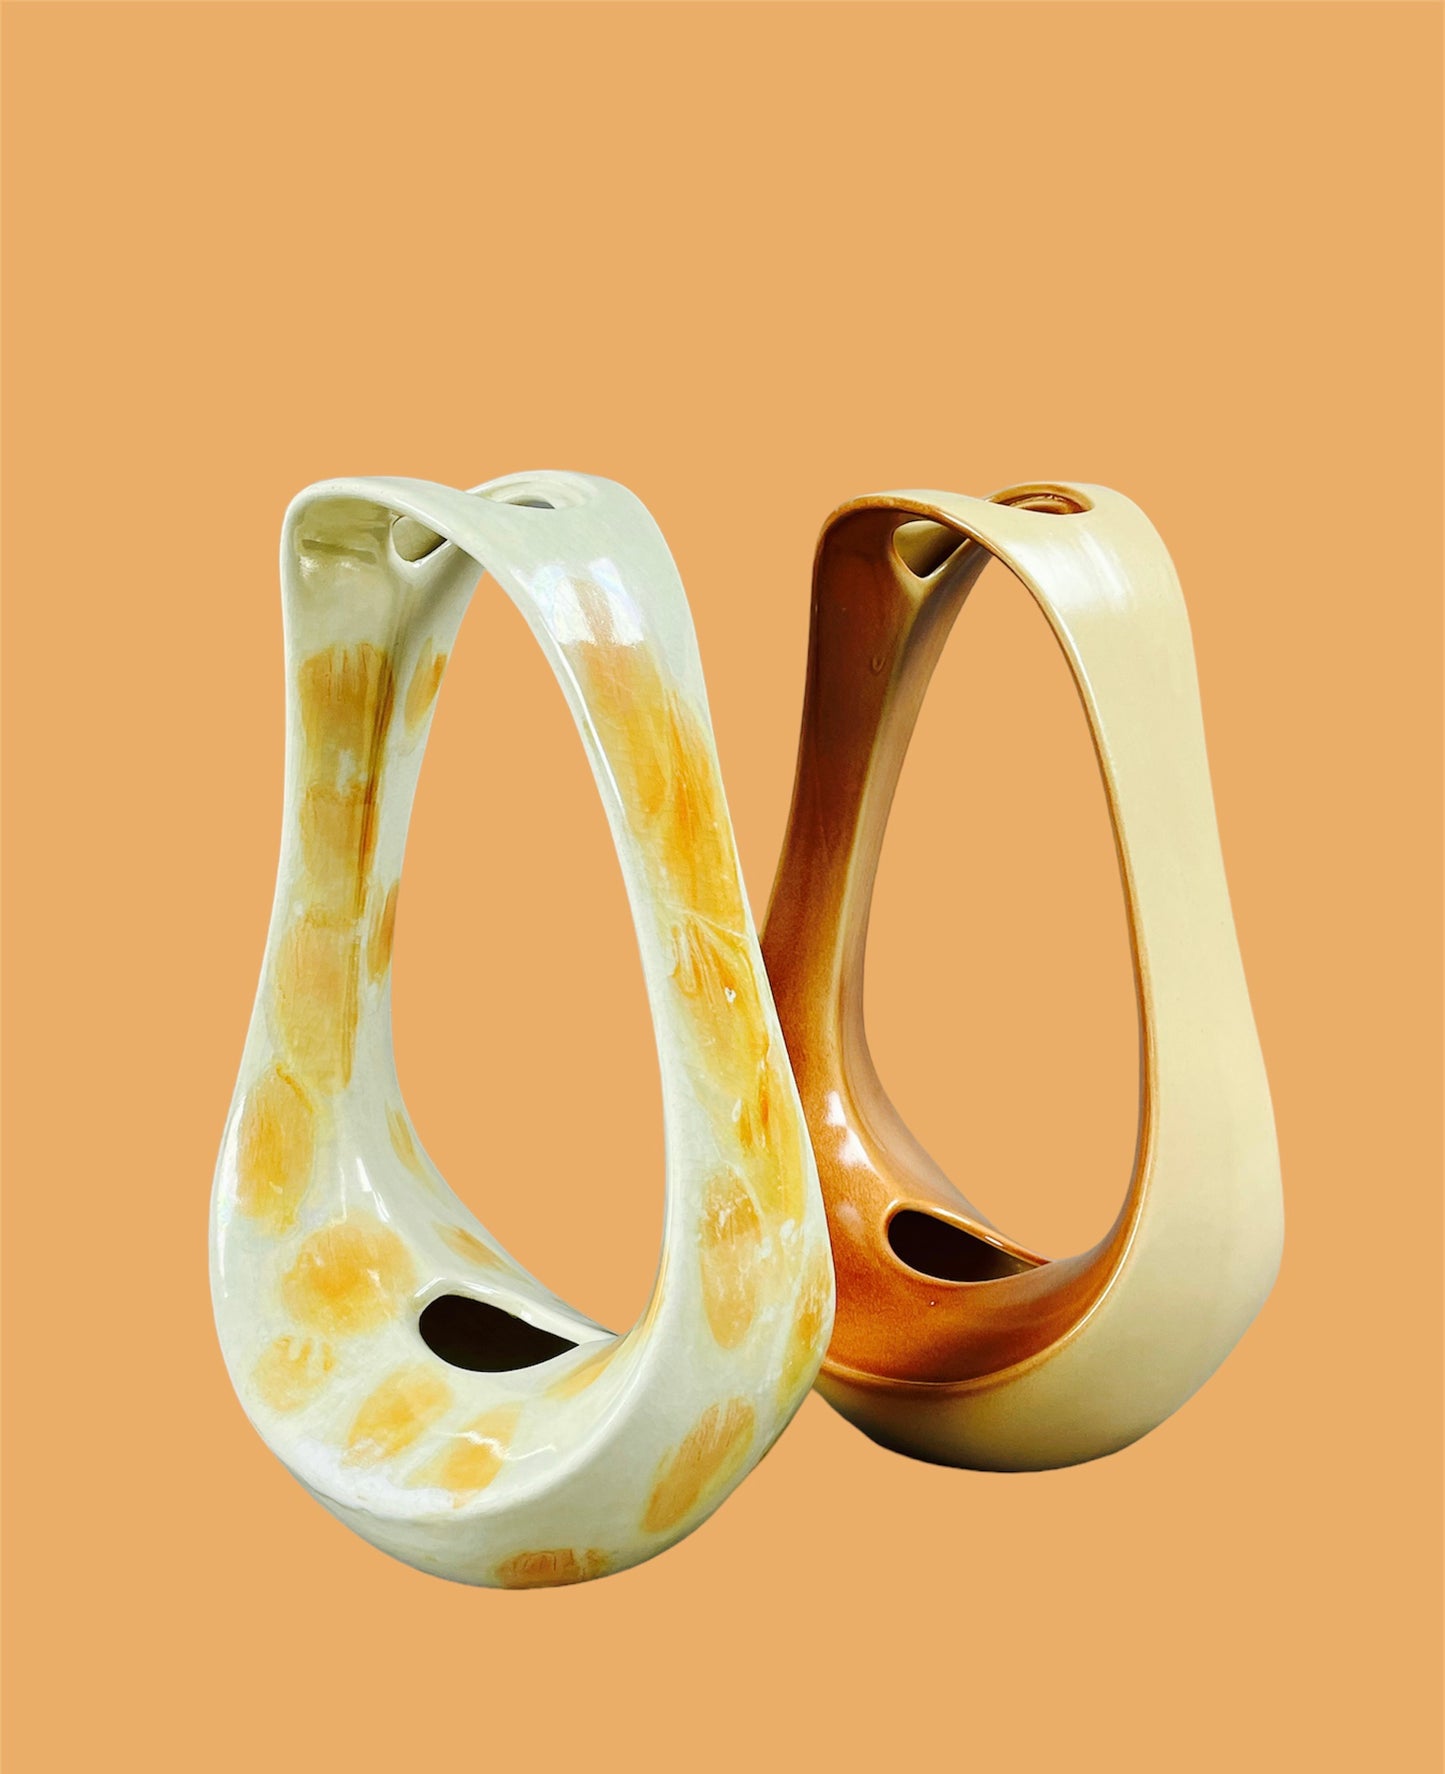 "Basket" organic shaped ceramic vase in brown/beige